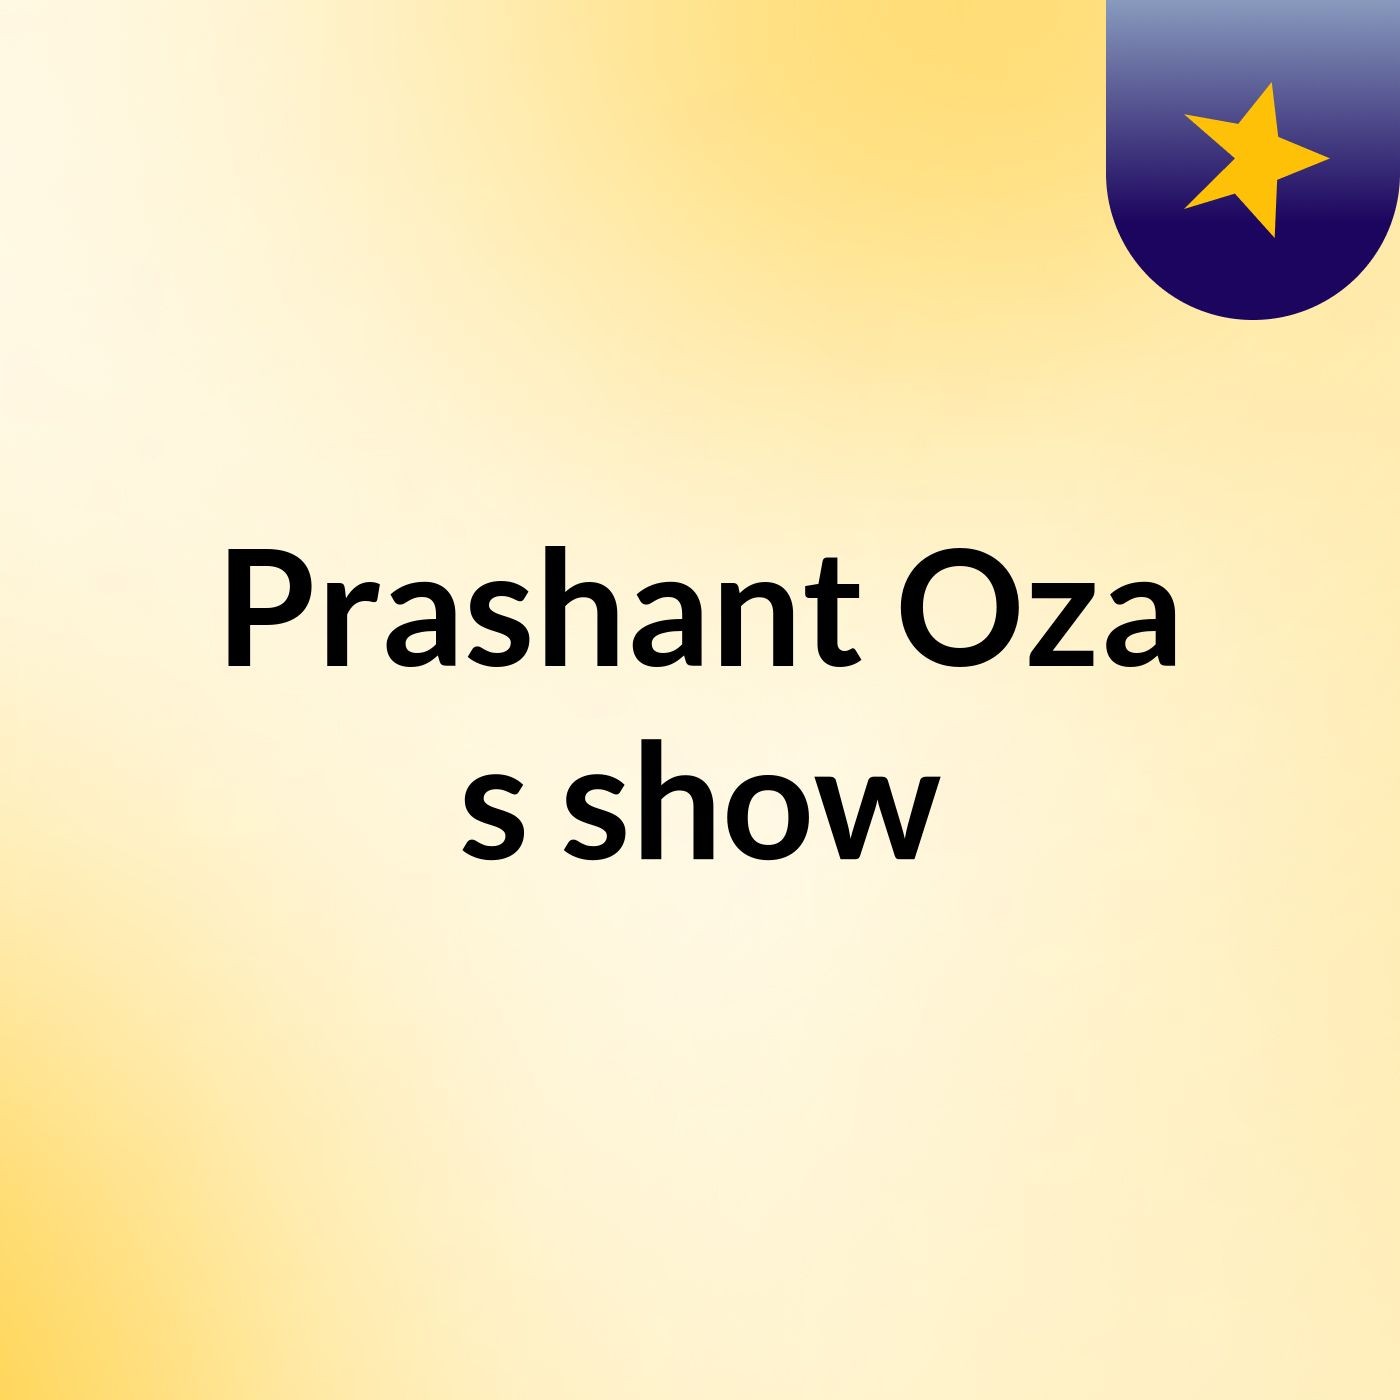 Prashant Oza's show